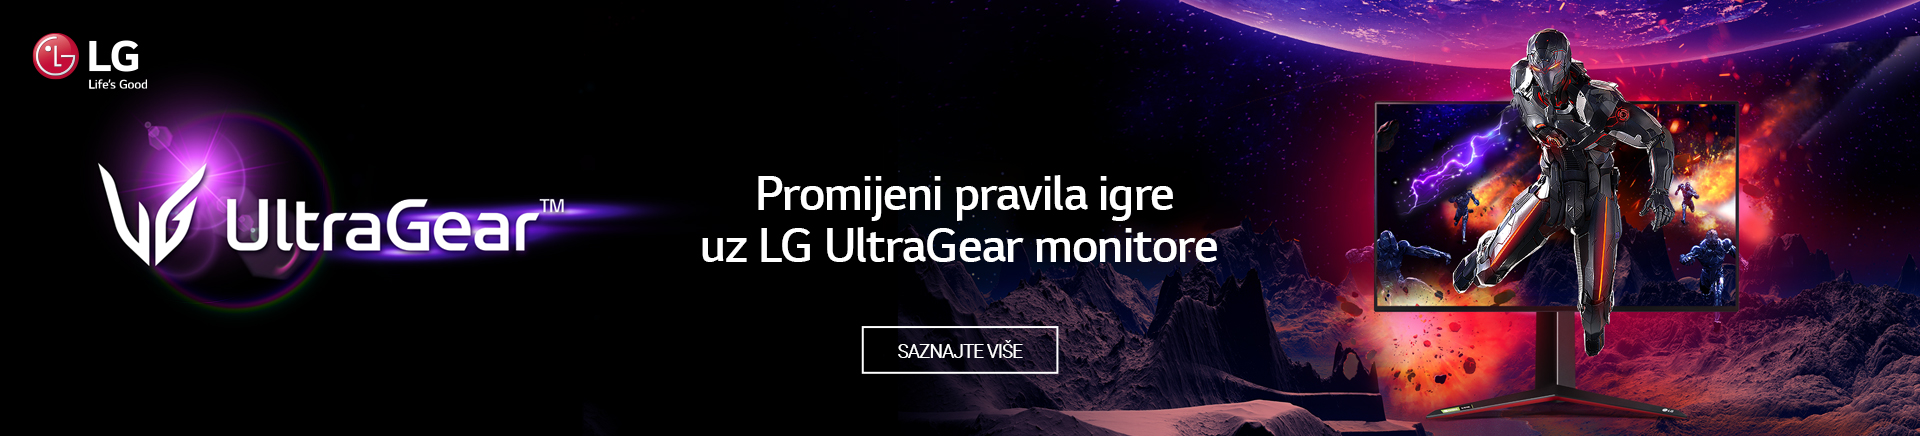 LG ultraGear monitori